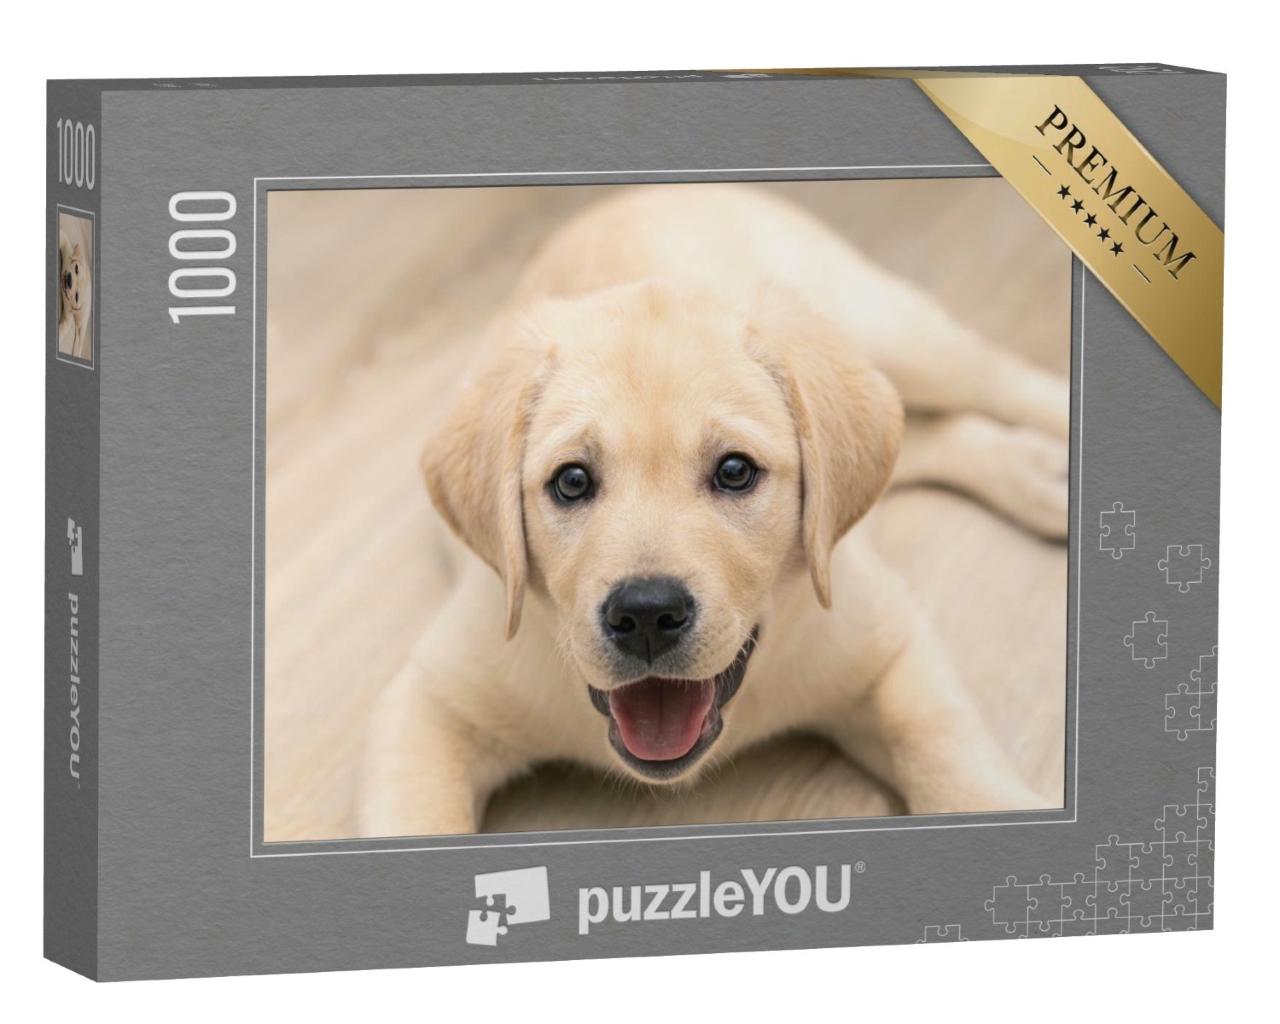 Puzzle de 1000 pièces « Adorable chiot labrador doré en gros plan »